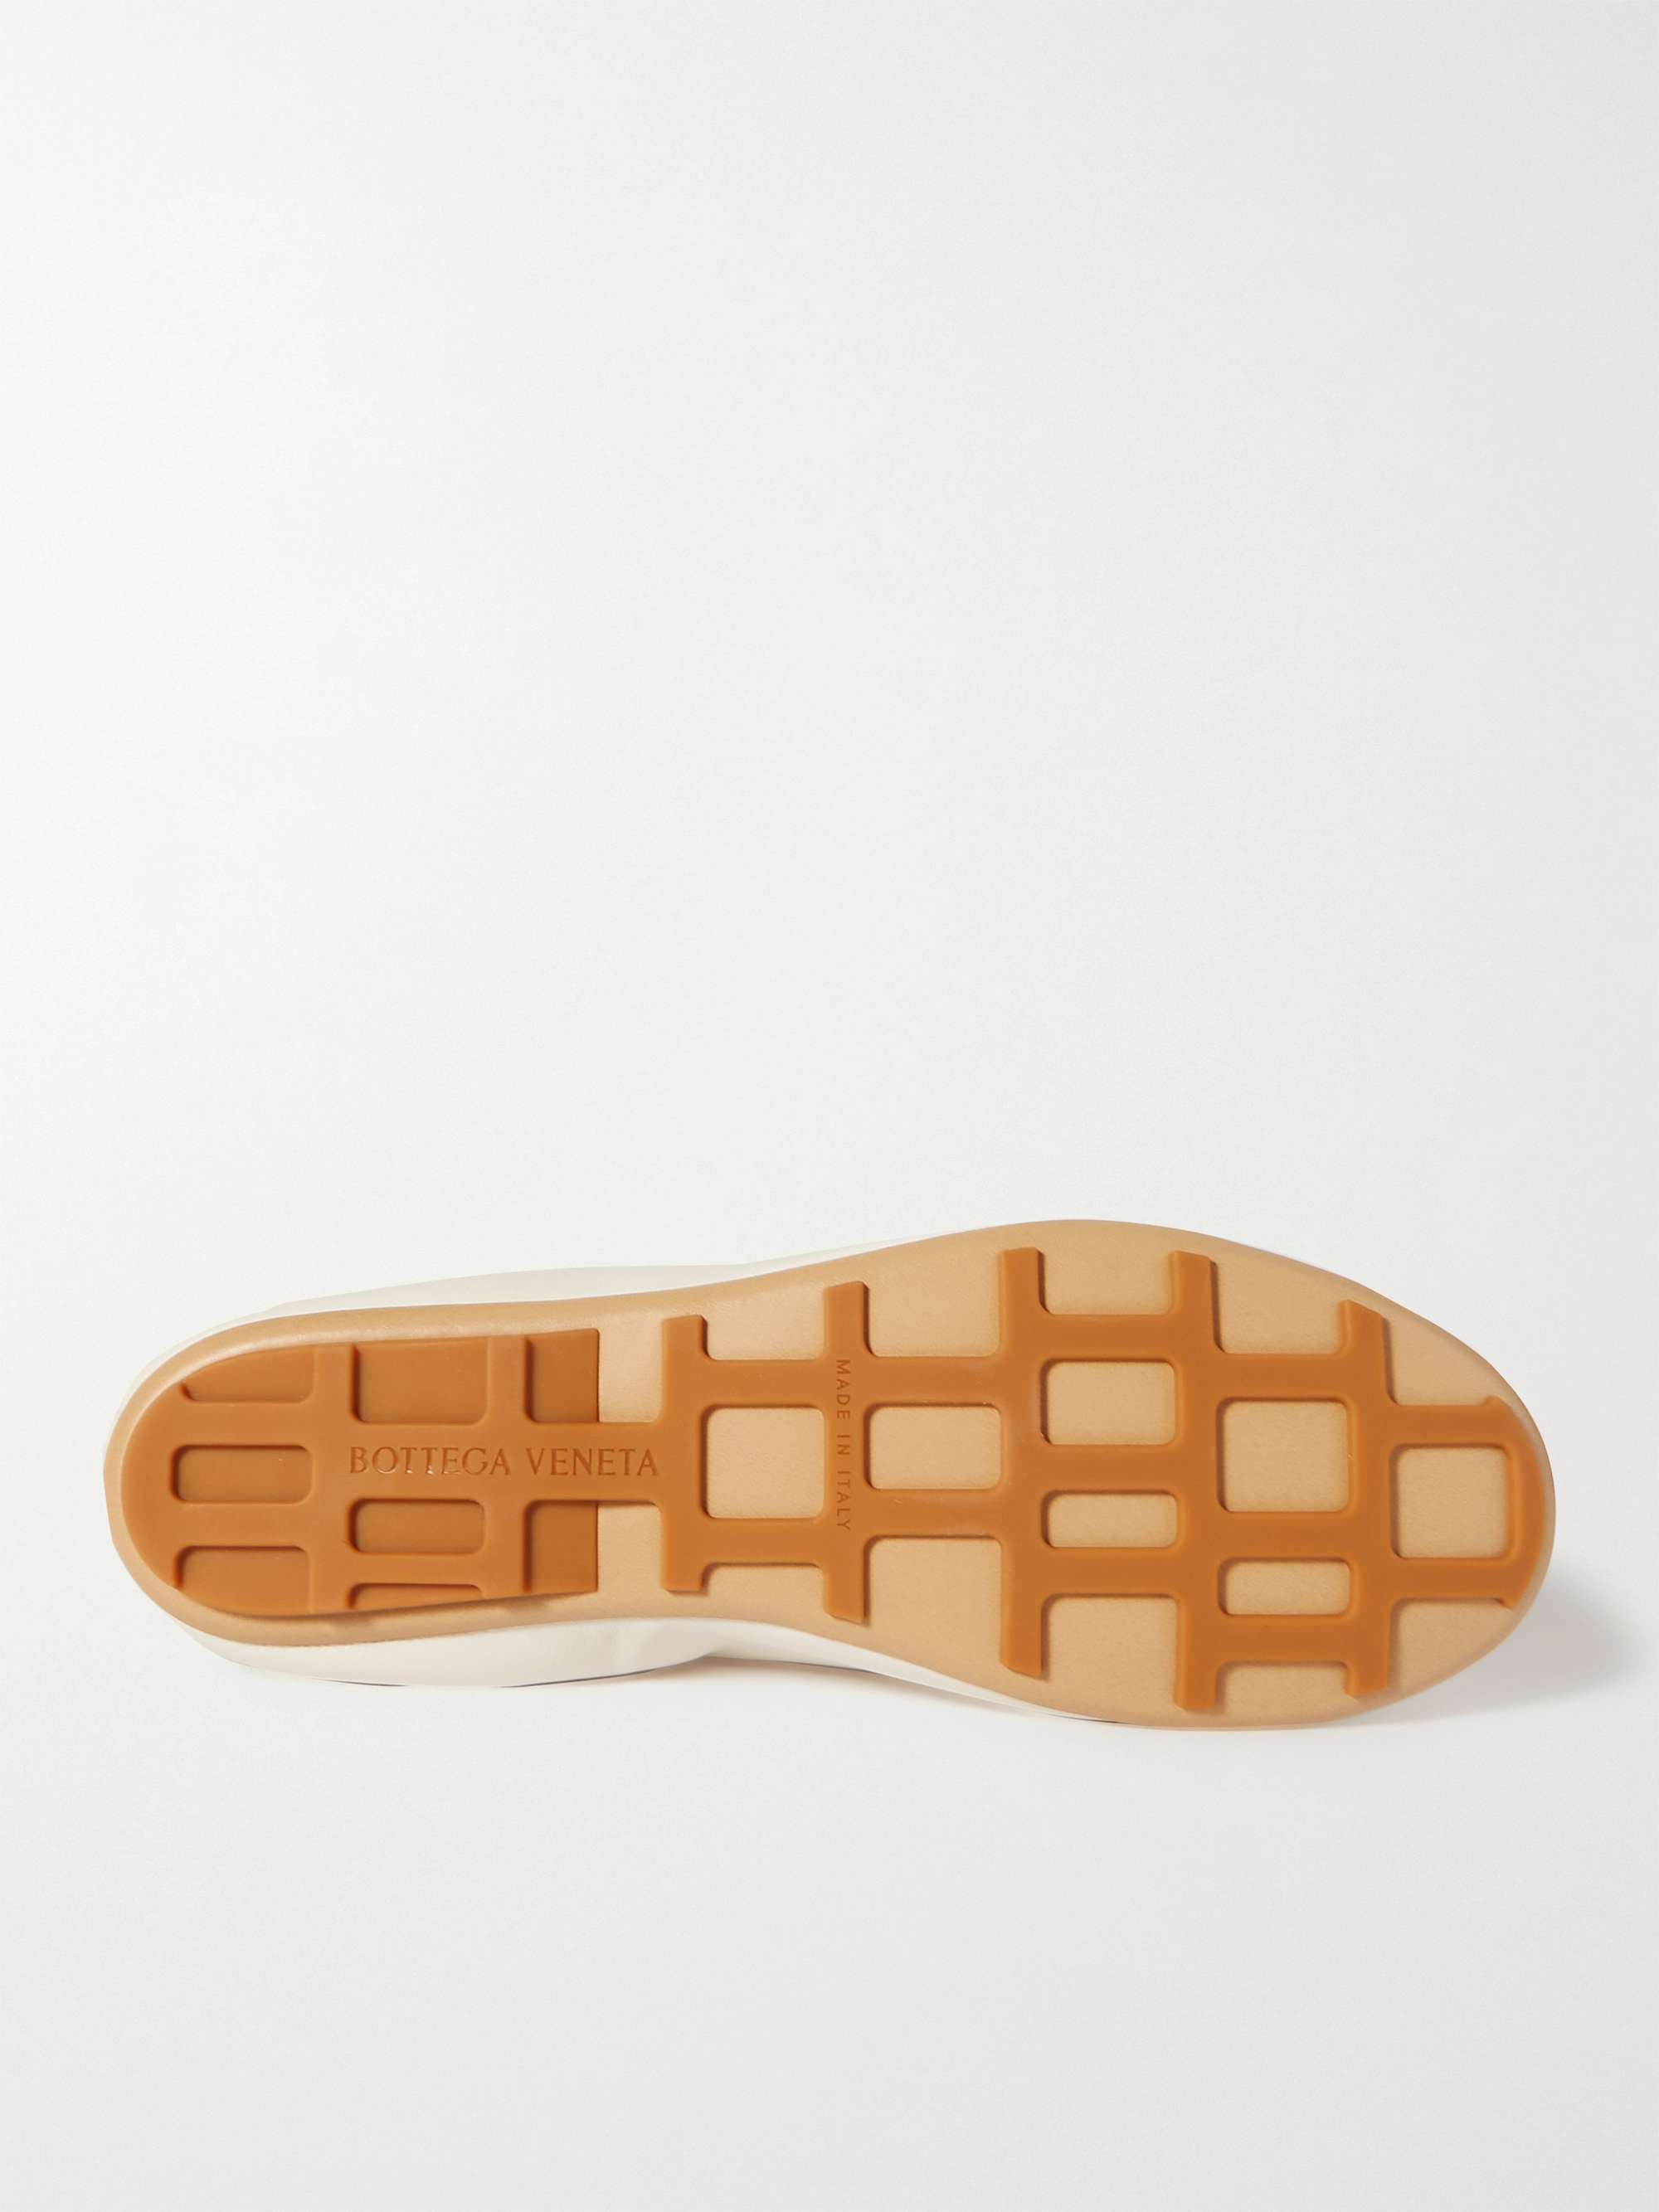 BOTTEGA VENETA Lattice Leather Loafers